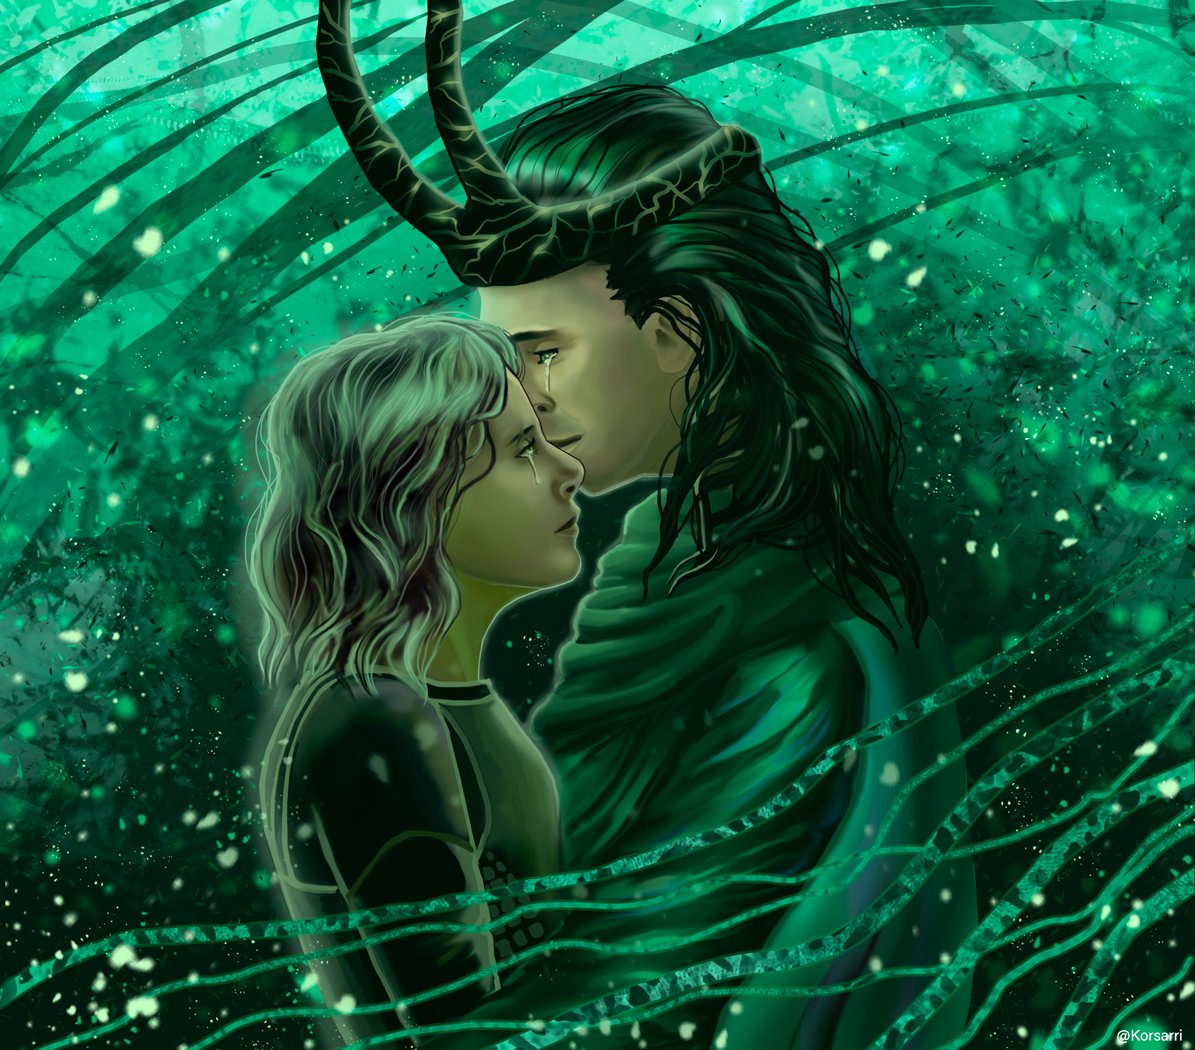 'He sacrifices himself so that she is okay.'

She won't be okay without you, Loki.

#Sylki #lokiseries #Loki #Marvel